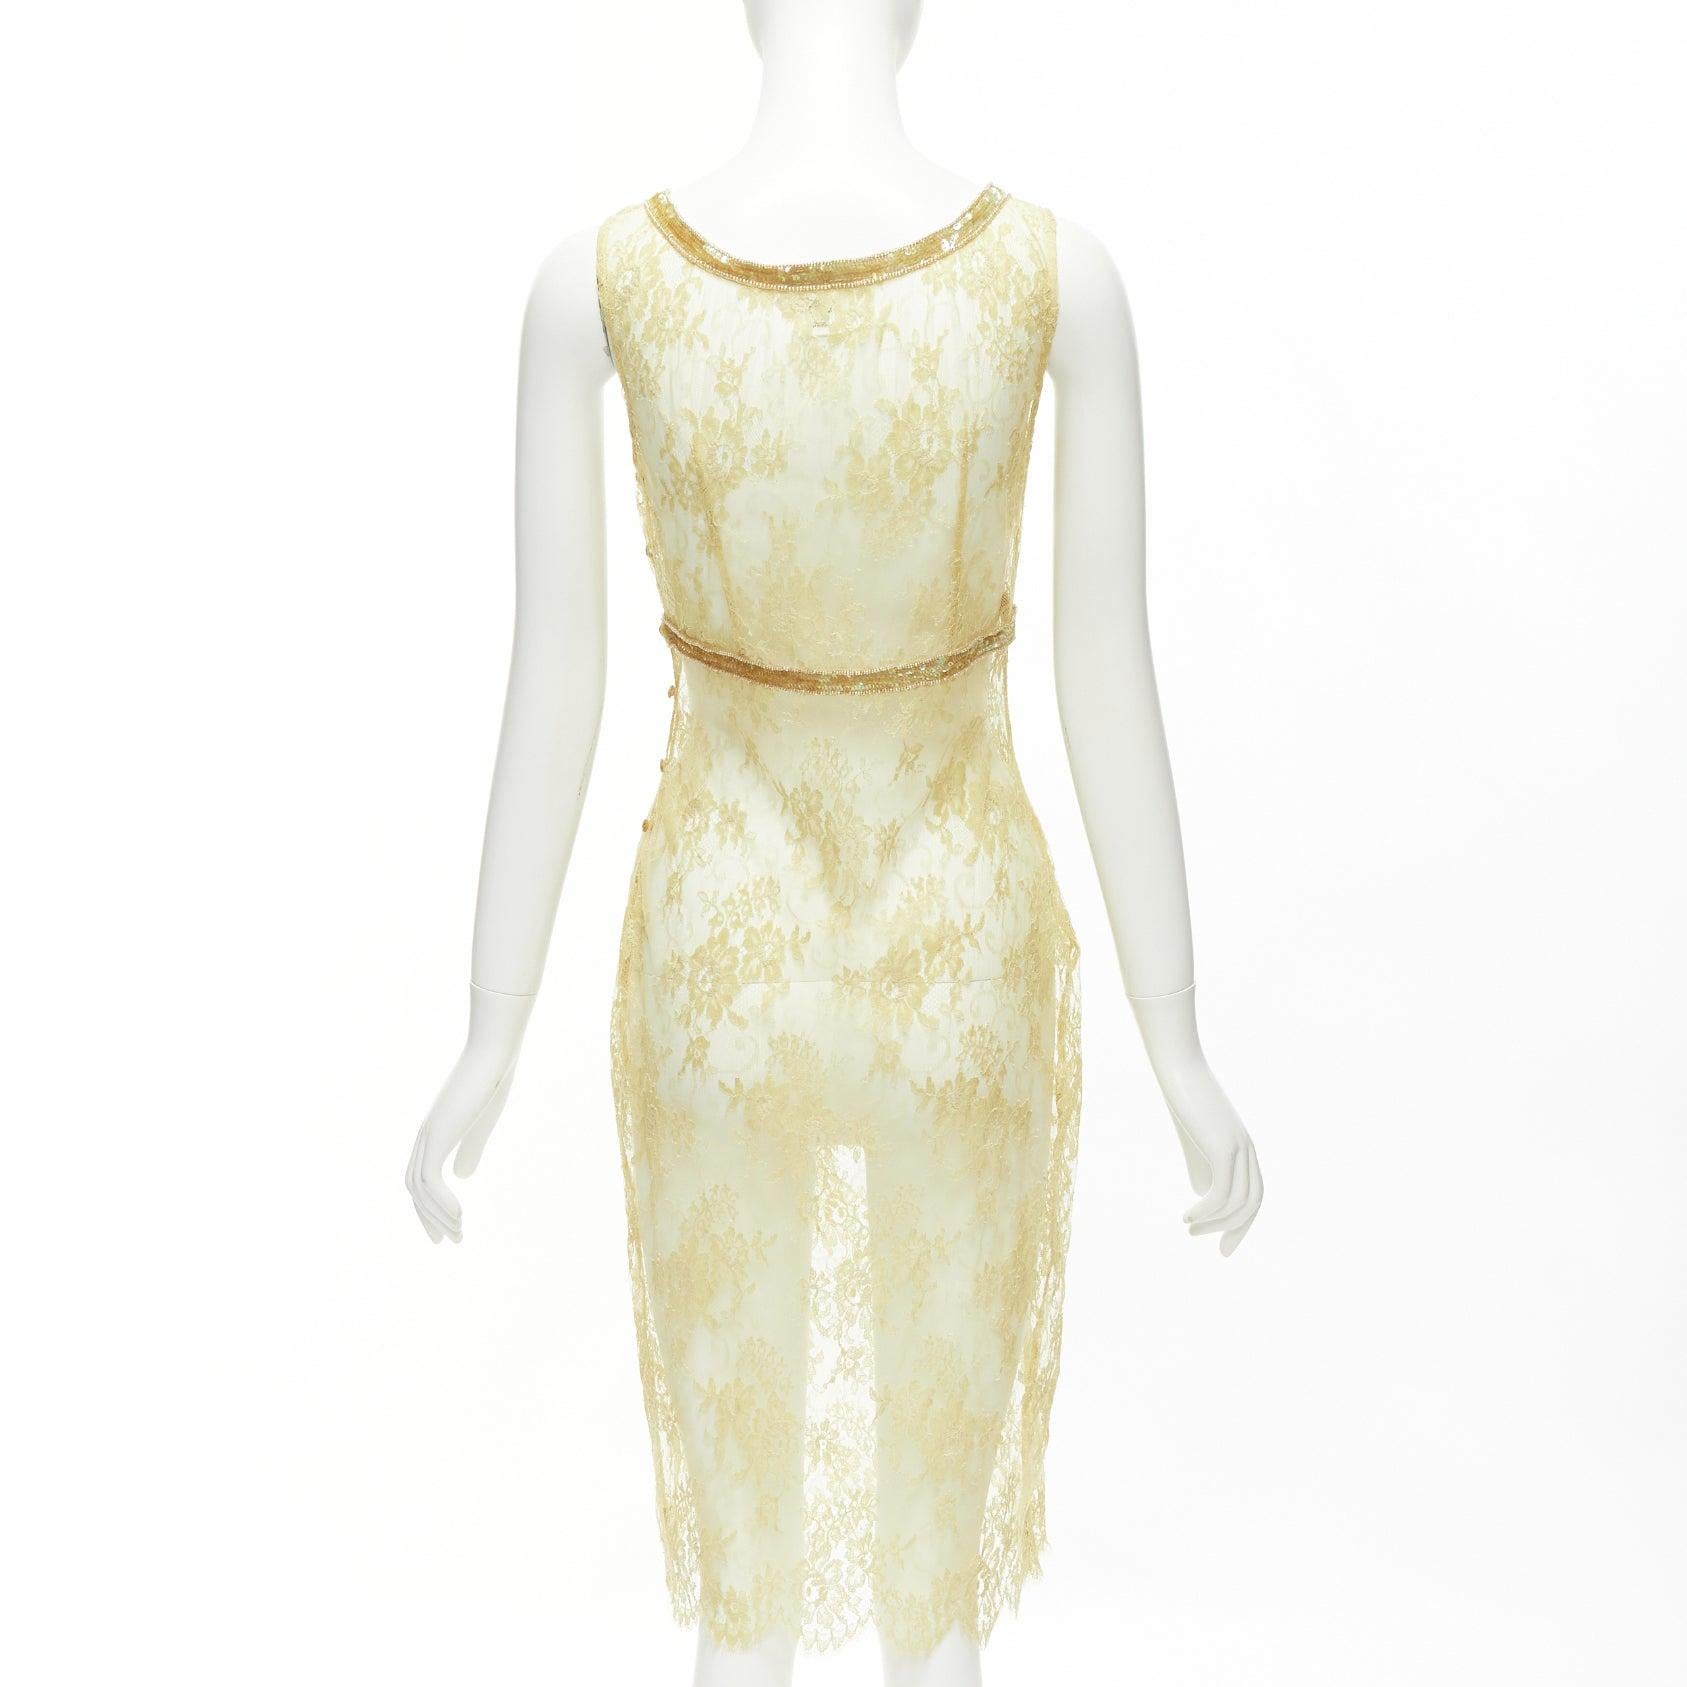 COLLETTE DINNIGAN Vintage gold sequins floral lace see through sheer dress S For Sale 1